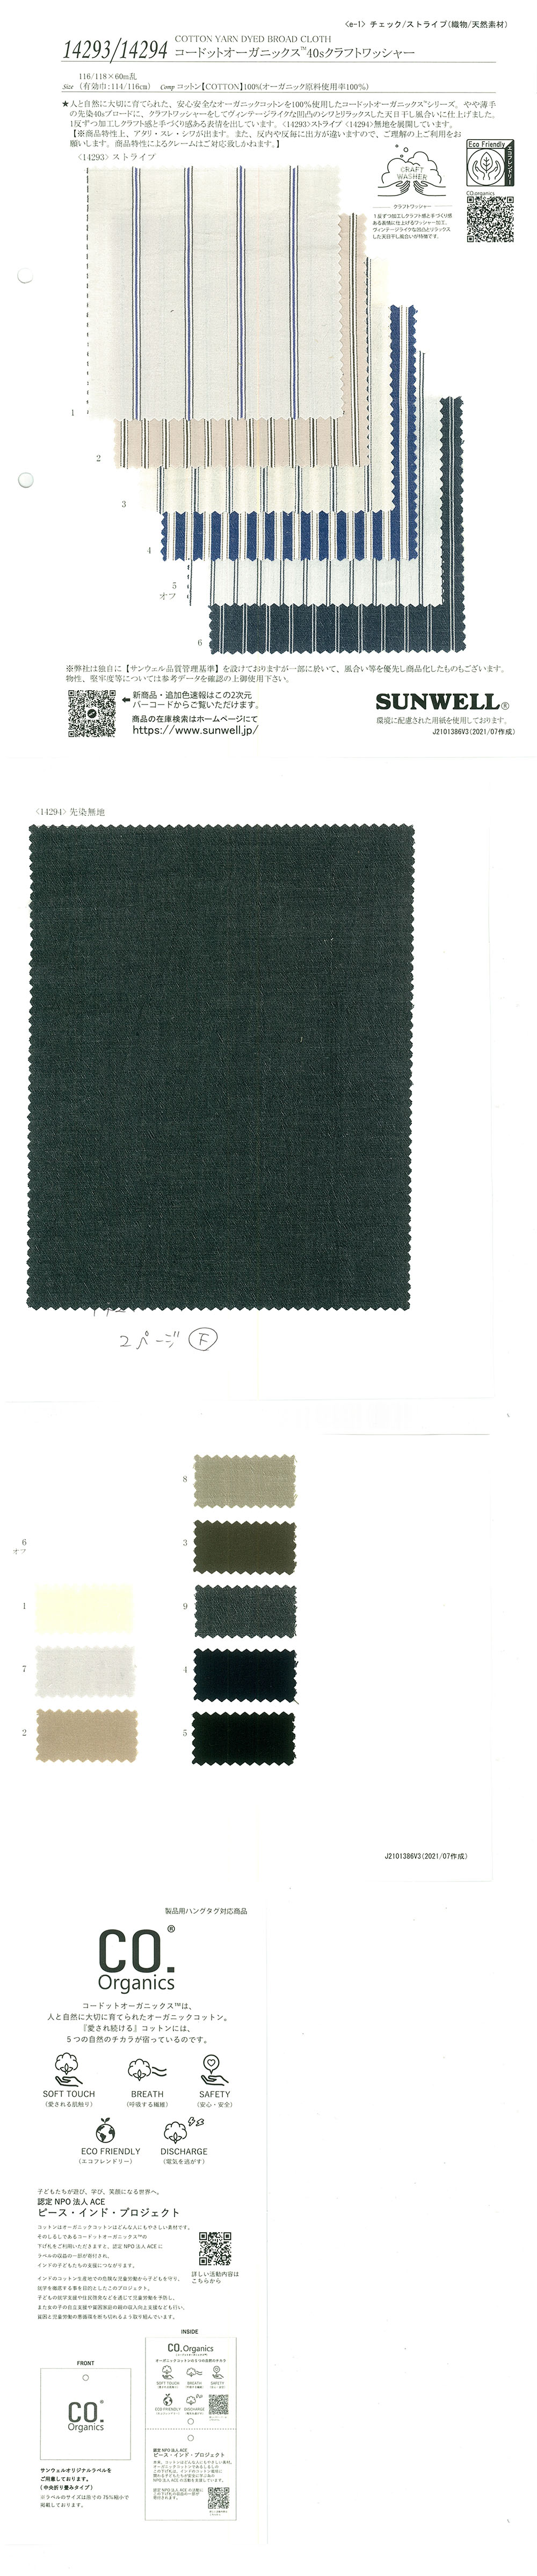 14294 Cordot Organics (R) 40 Single Thread Craft Washer Verarbeitung[Textilgewebe] SUNWELL